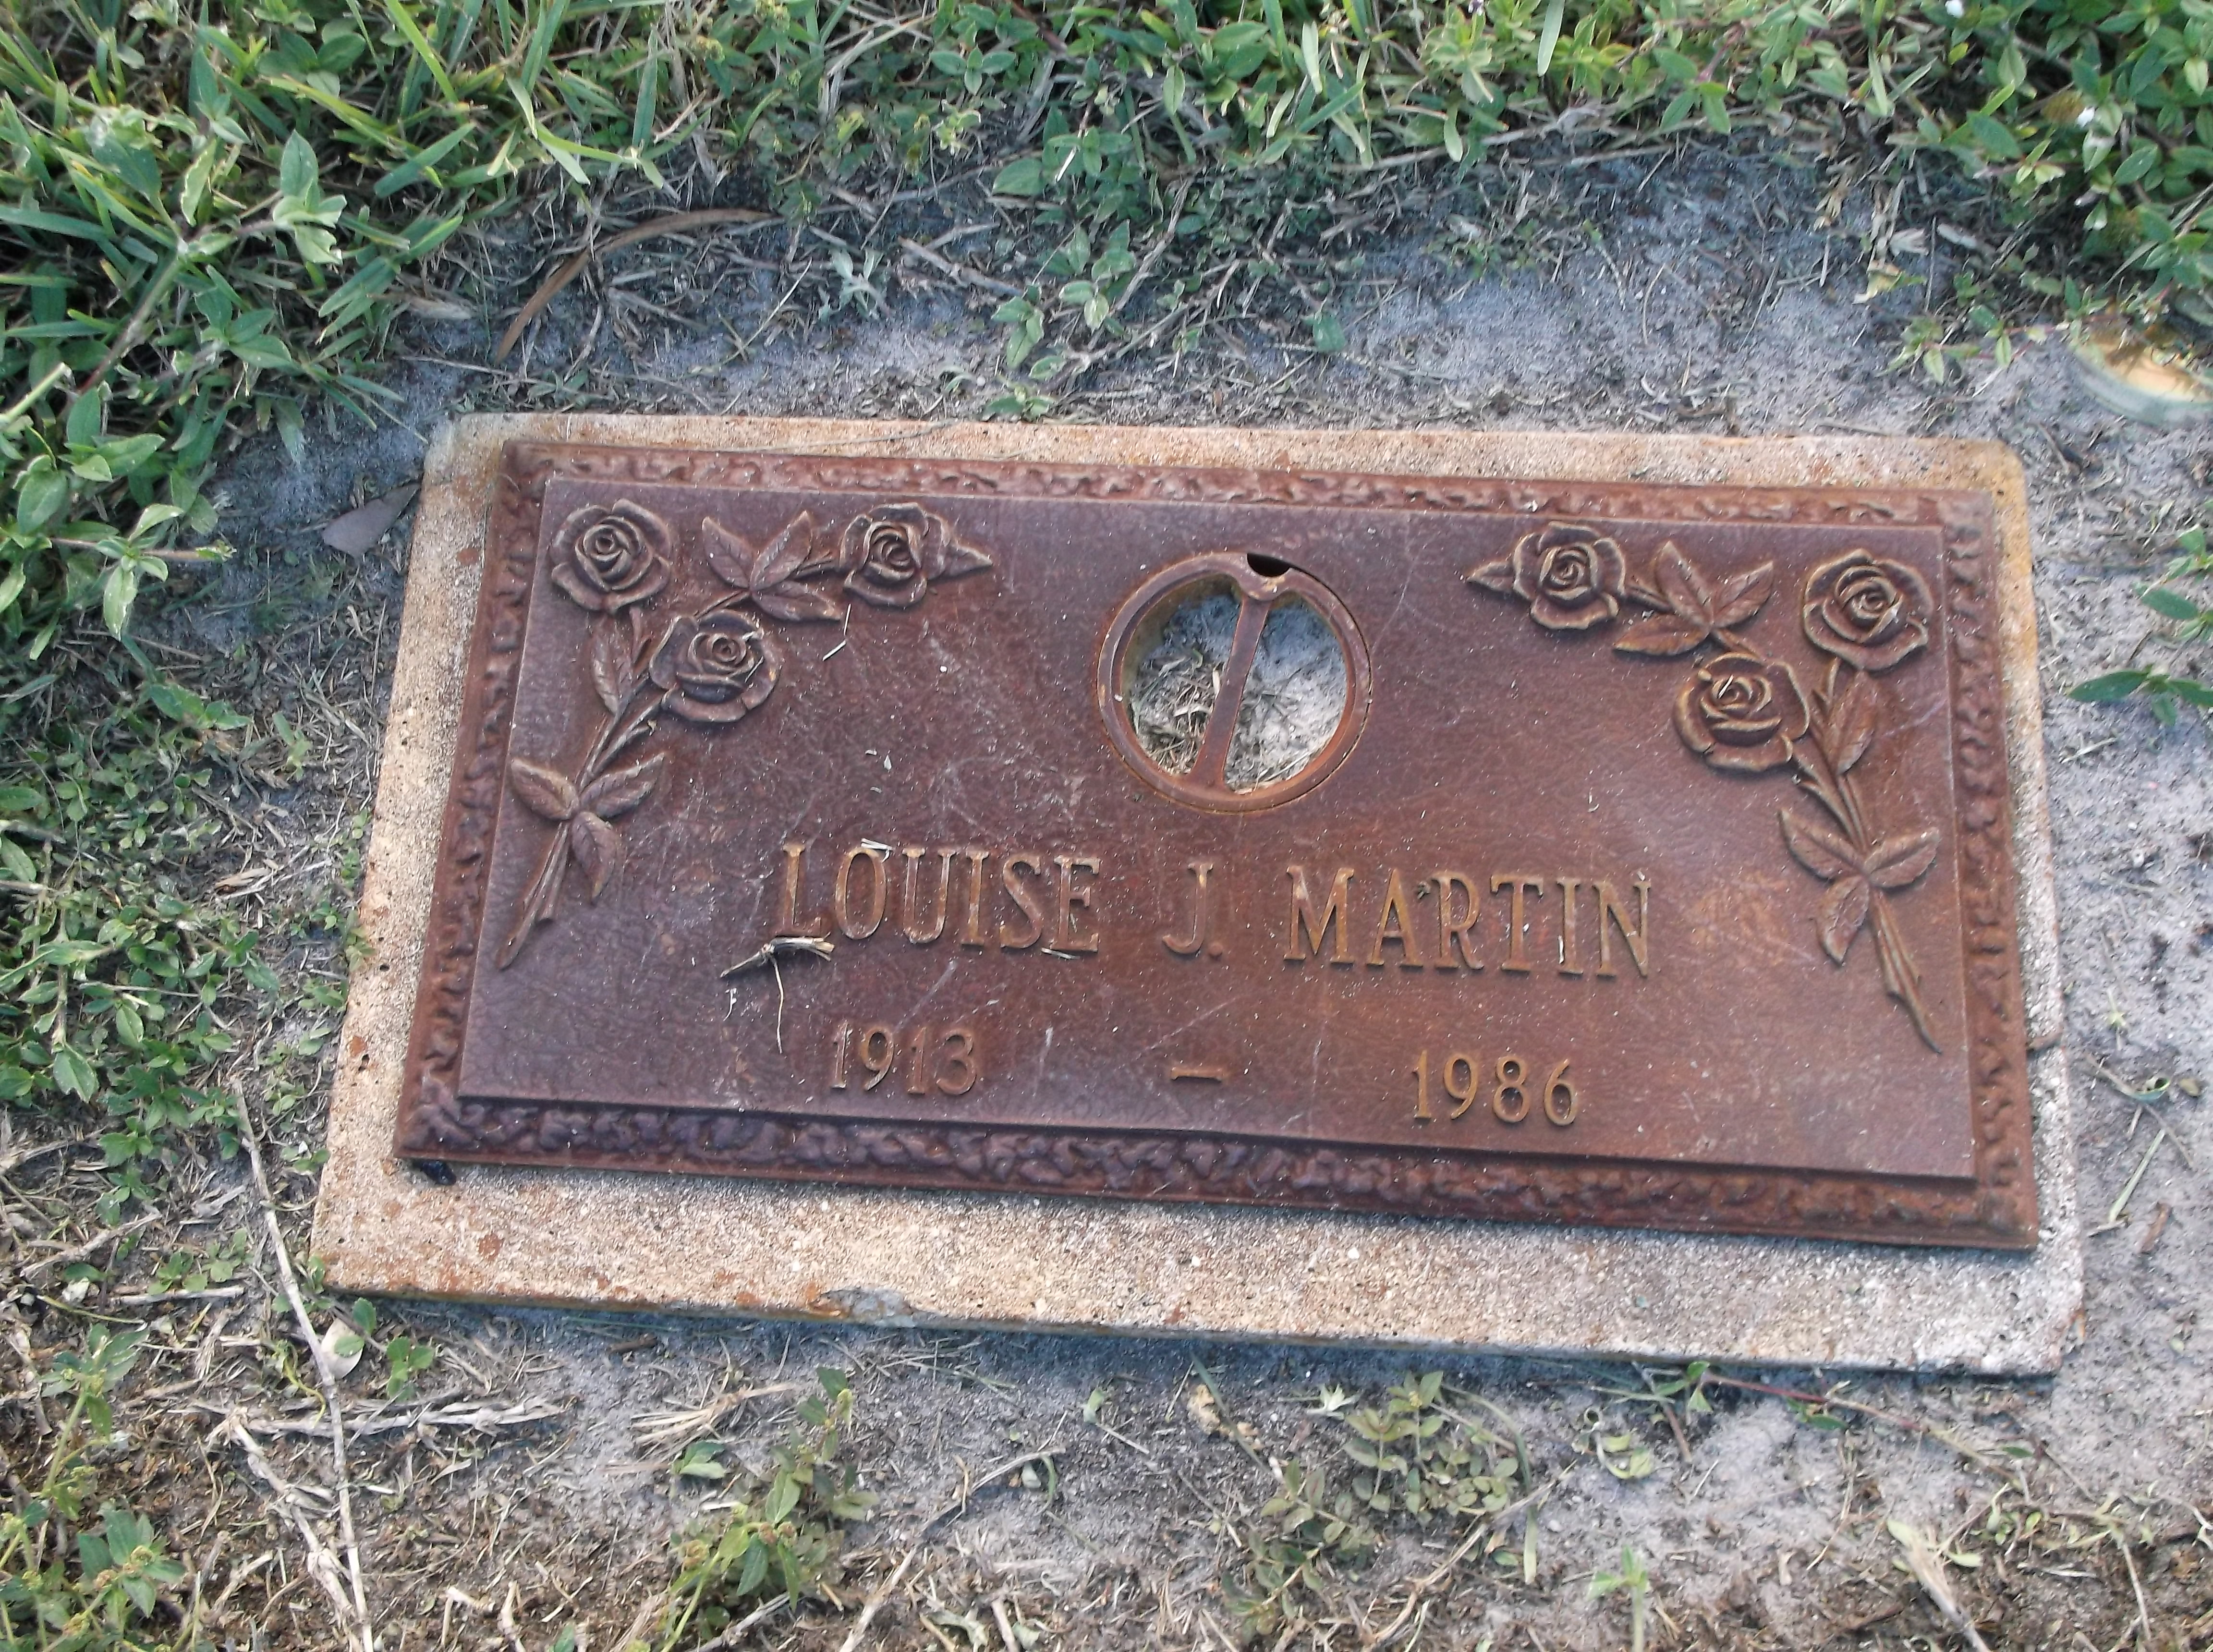 Louise J Martin